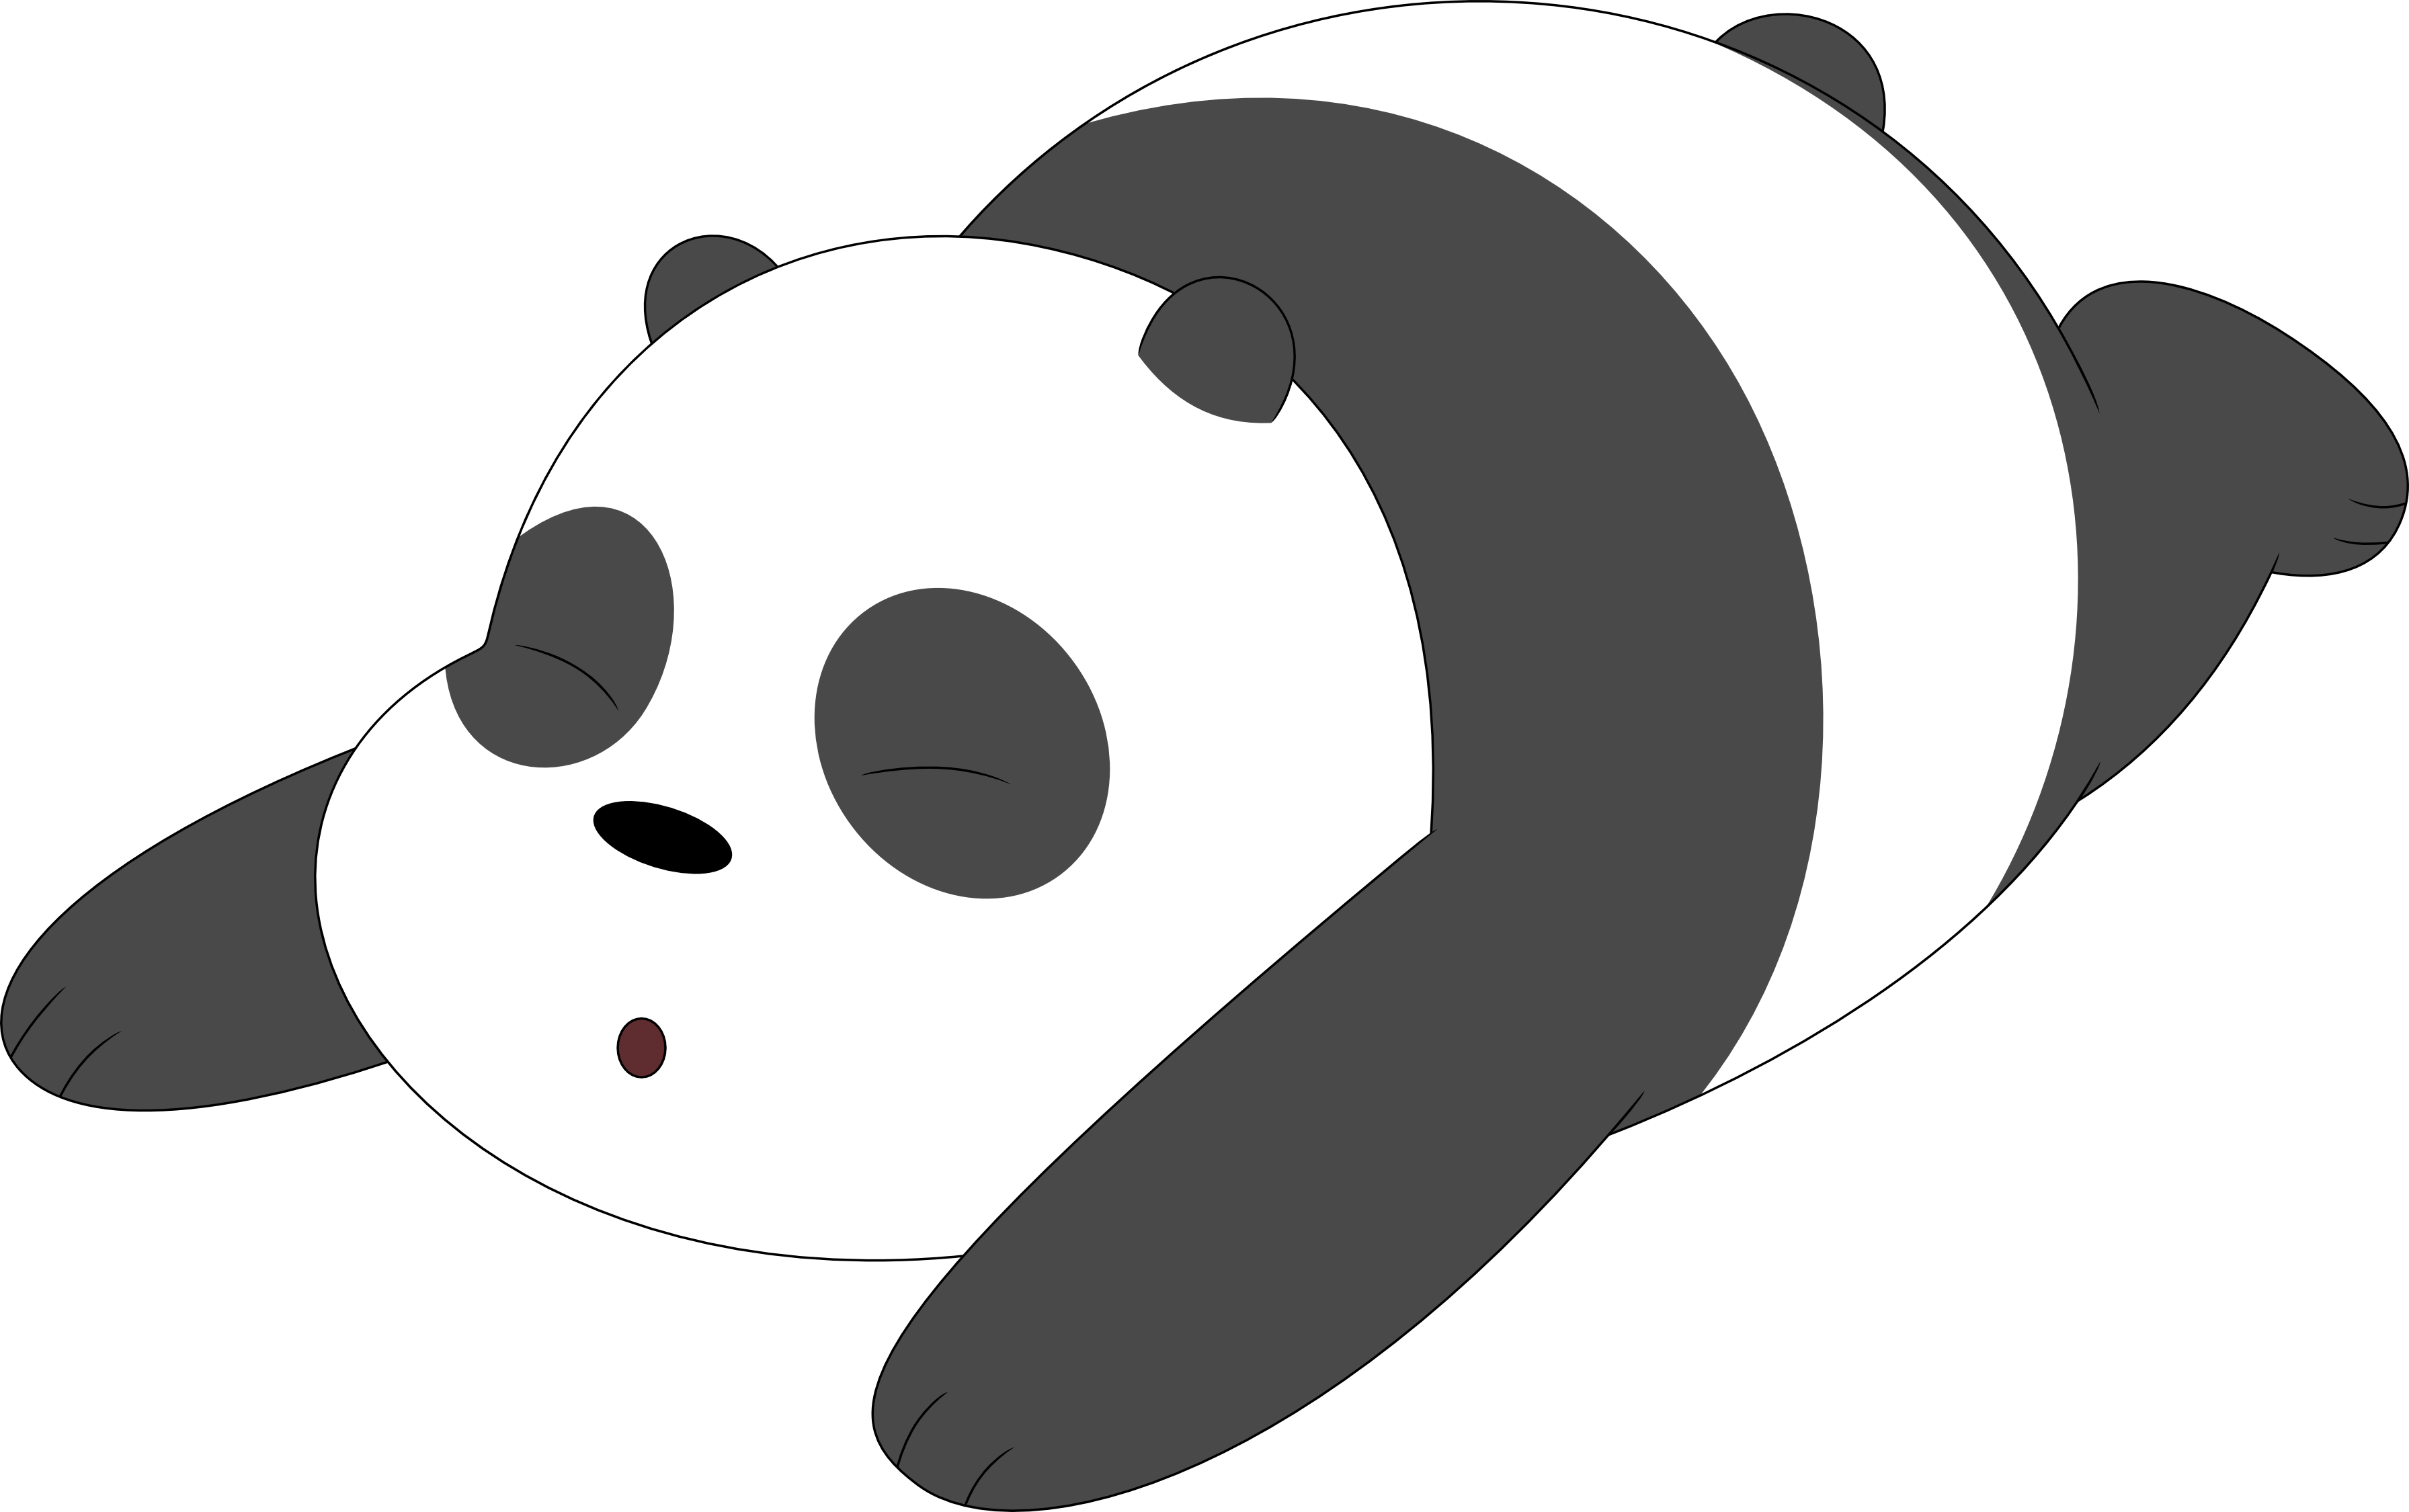 Panda Bear PNG HD Quality